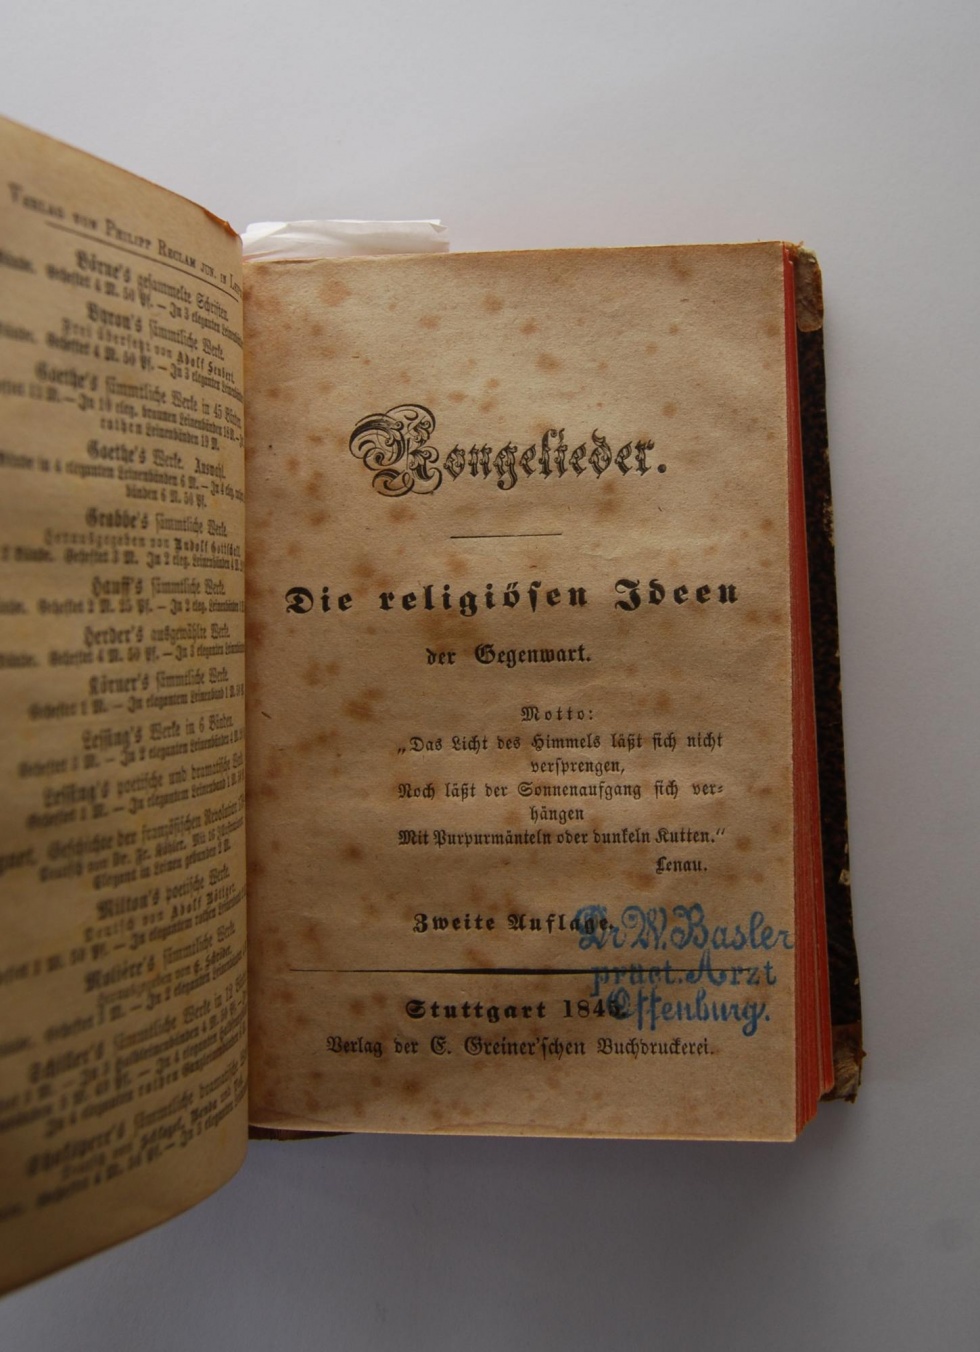 Rongelieder. Die religiösen Ideen der Gegenwart (Museum Schloss Moritzburg Zeitz CC BY-NC-SA)